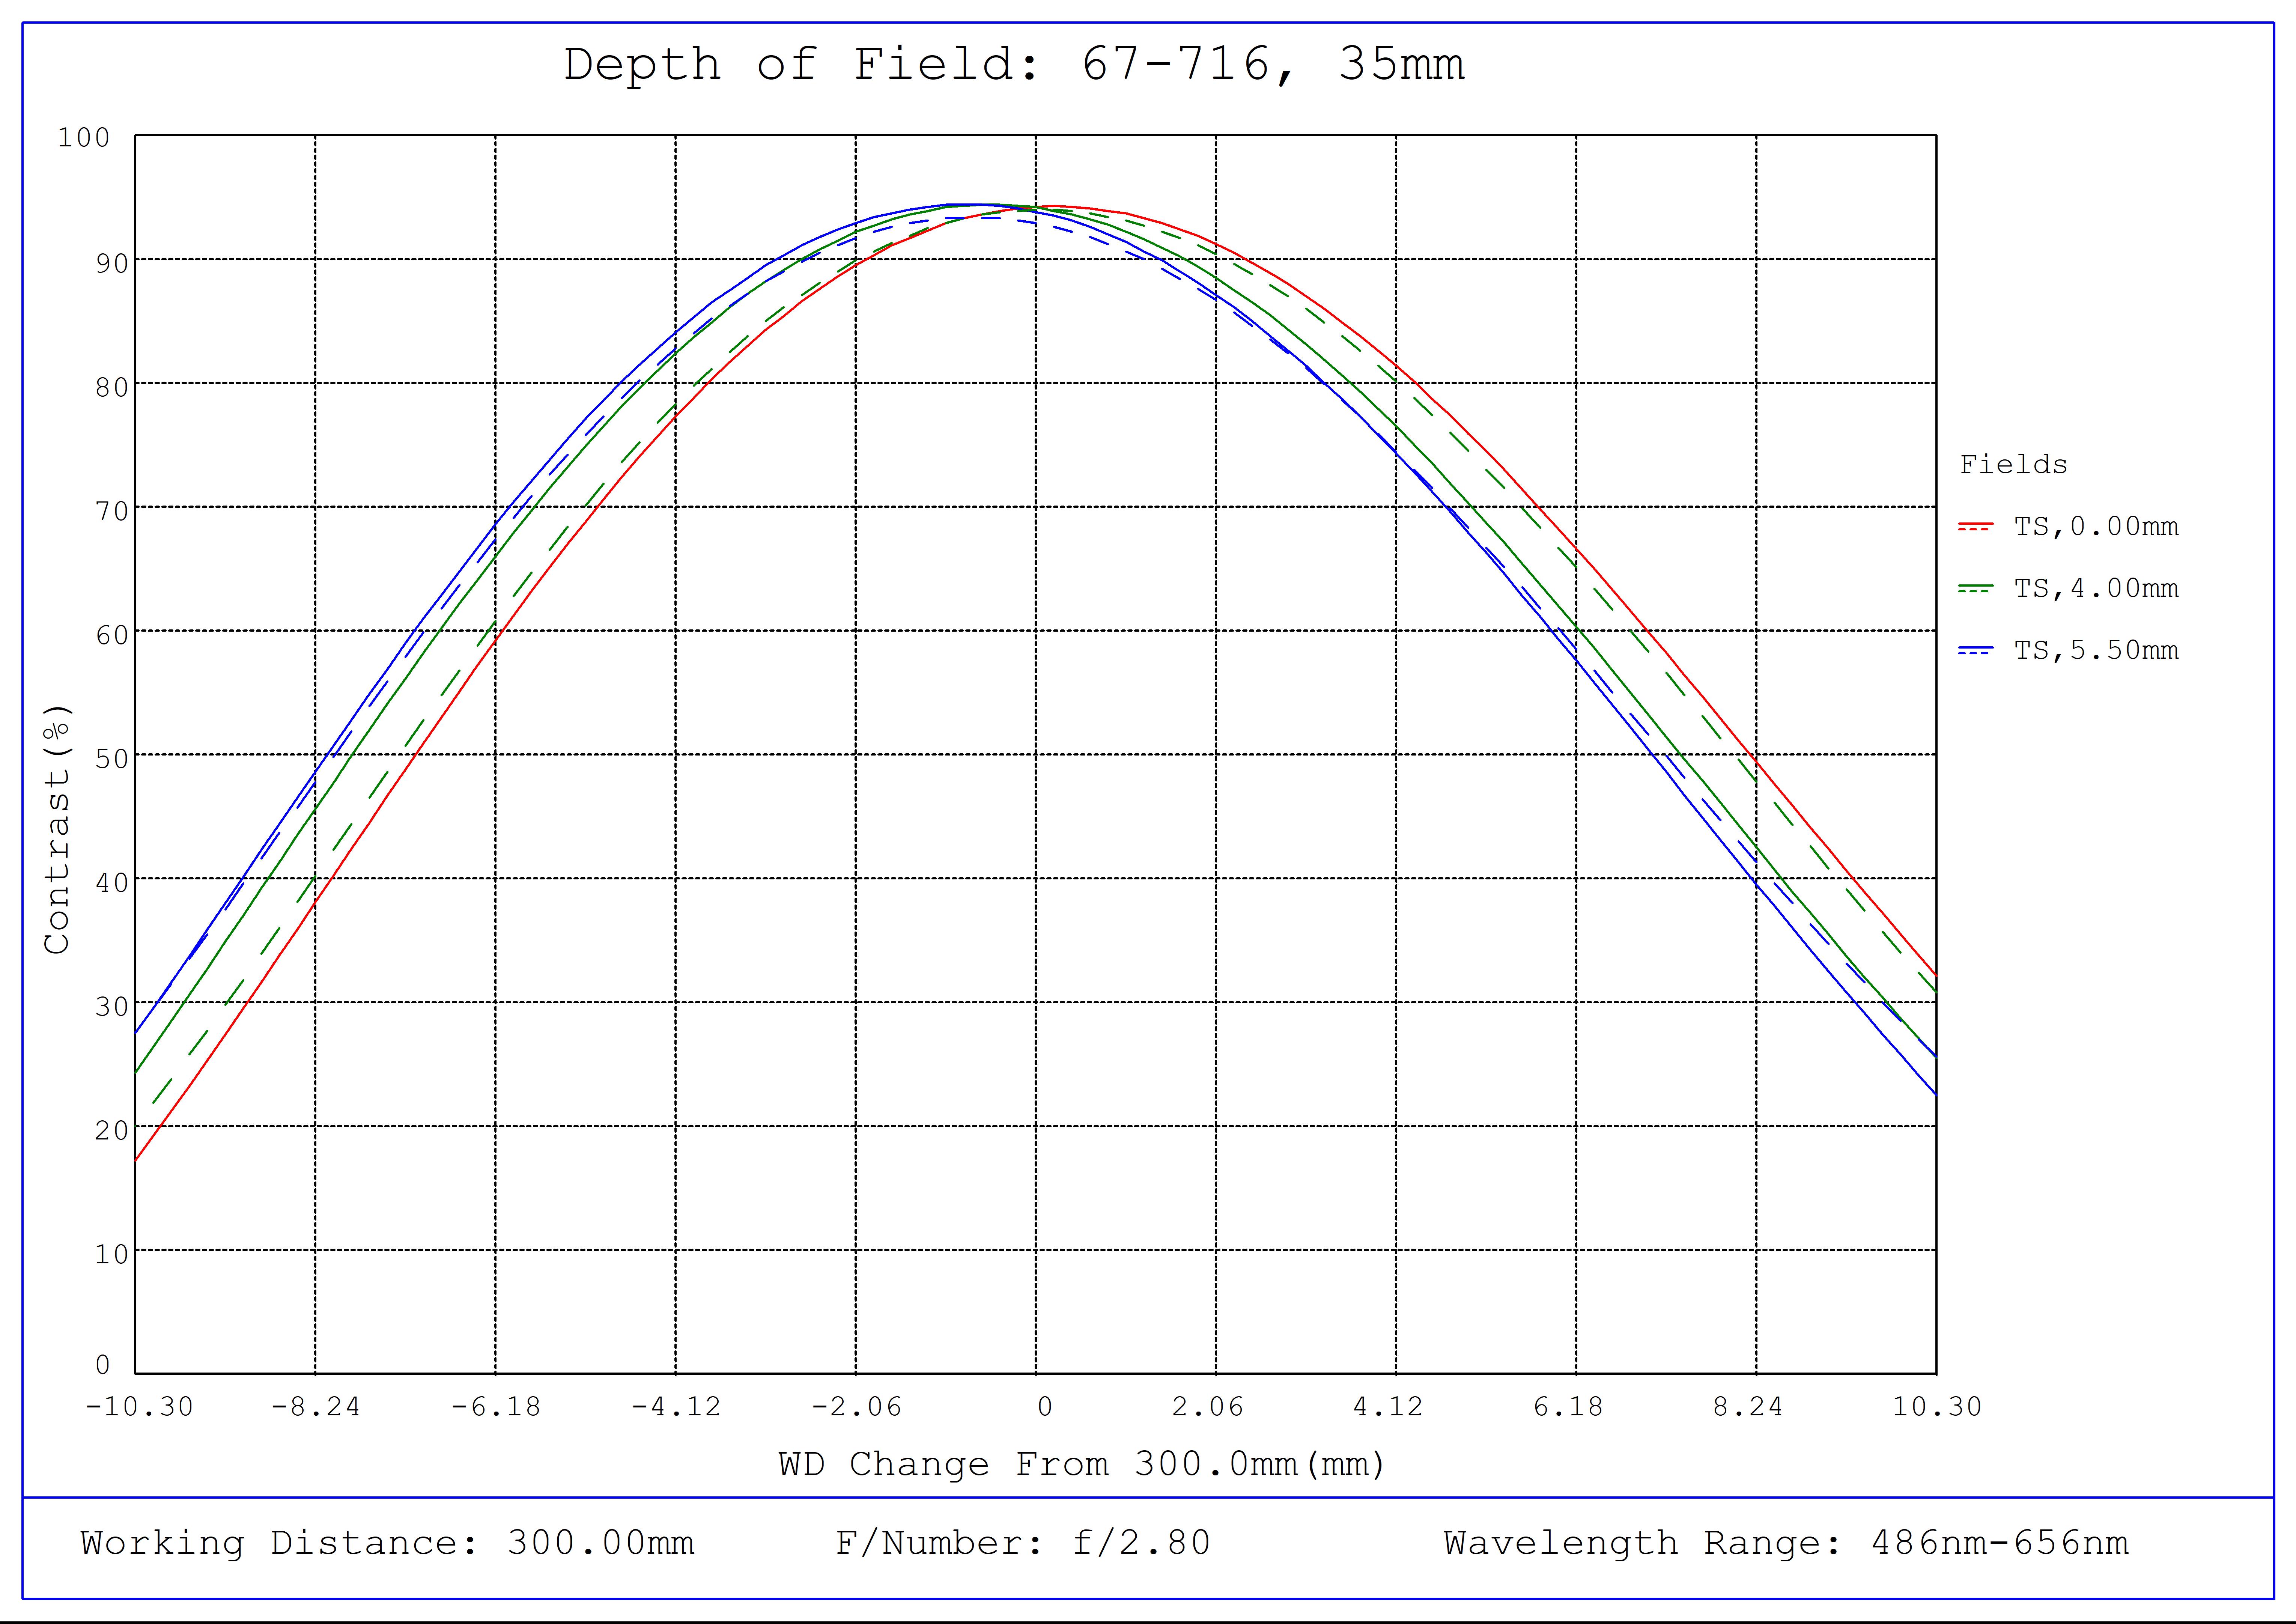 #67-716, 35mm C VIS-NIR Series Fixed Focal Length Lens, Depth of Field Plot, 300mm Working Distance, f2.8